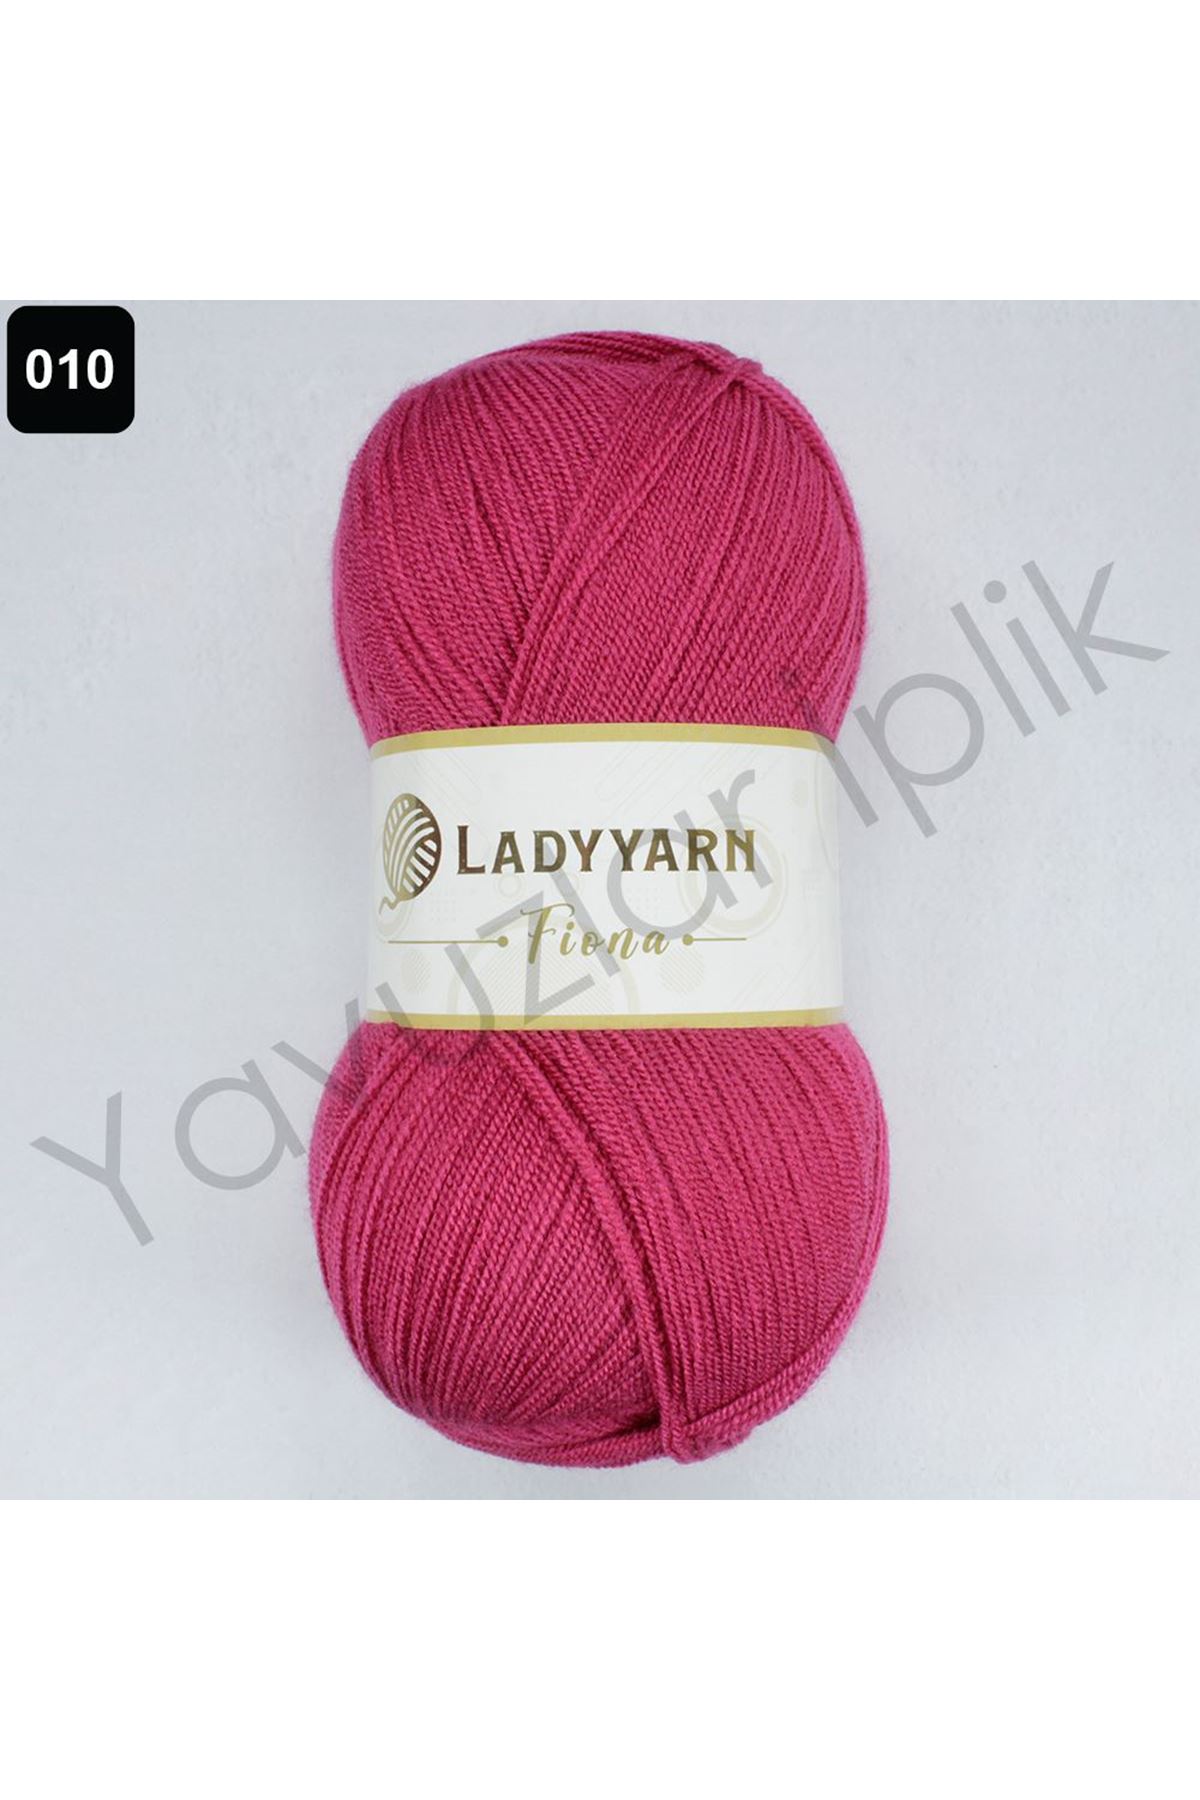 Lady Yarn Fiona Renk No: 010